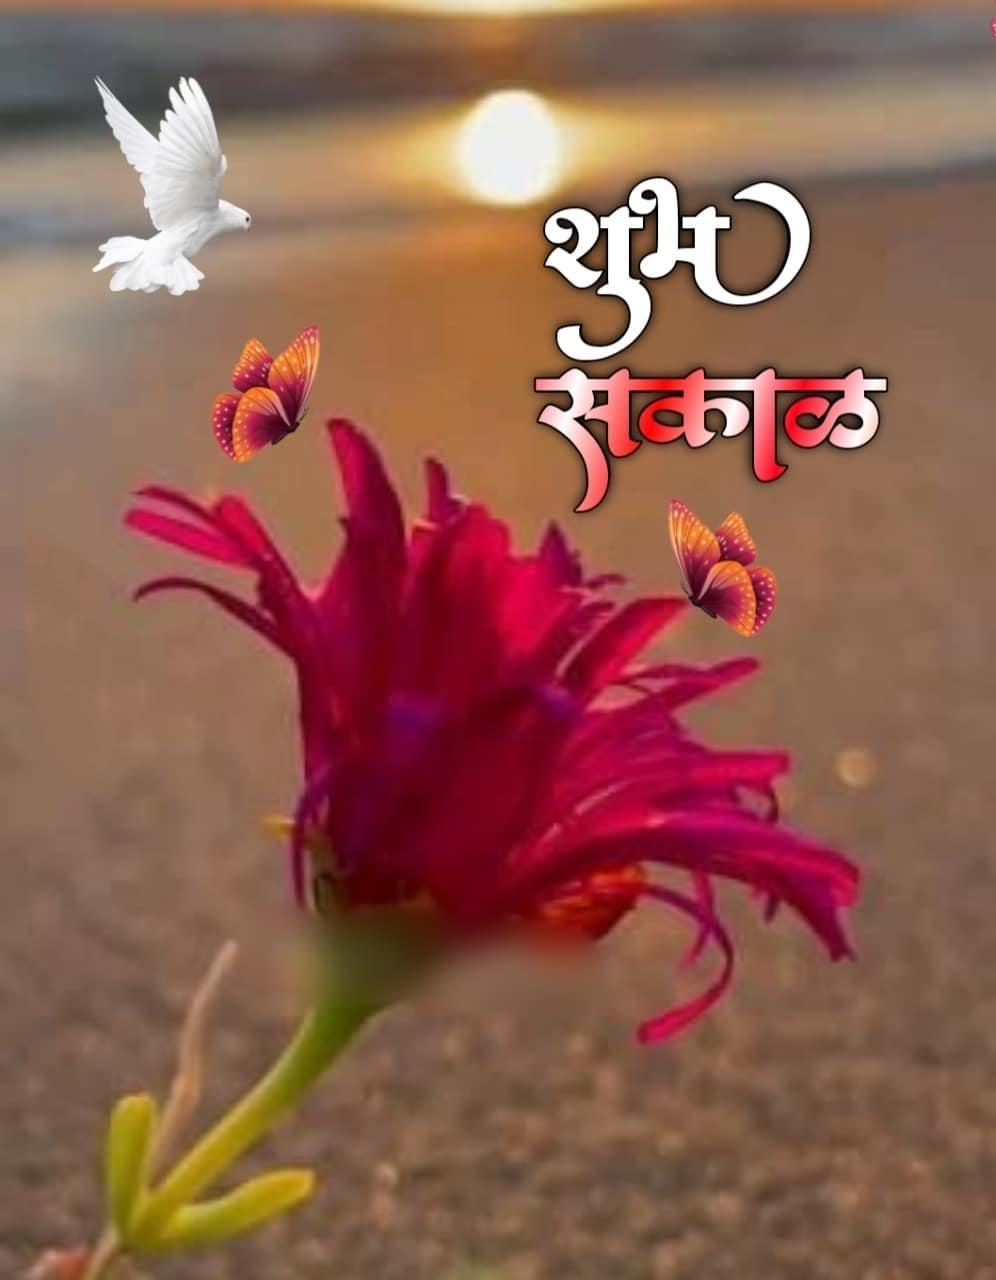 Shubh Sakal Flower Images (56)